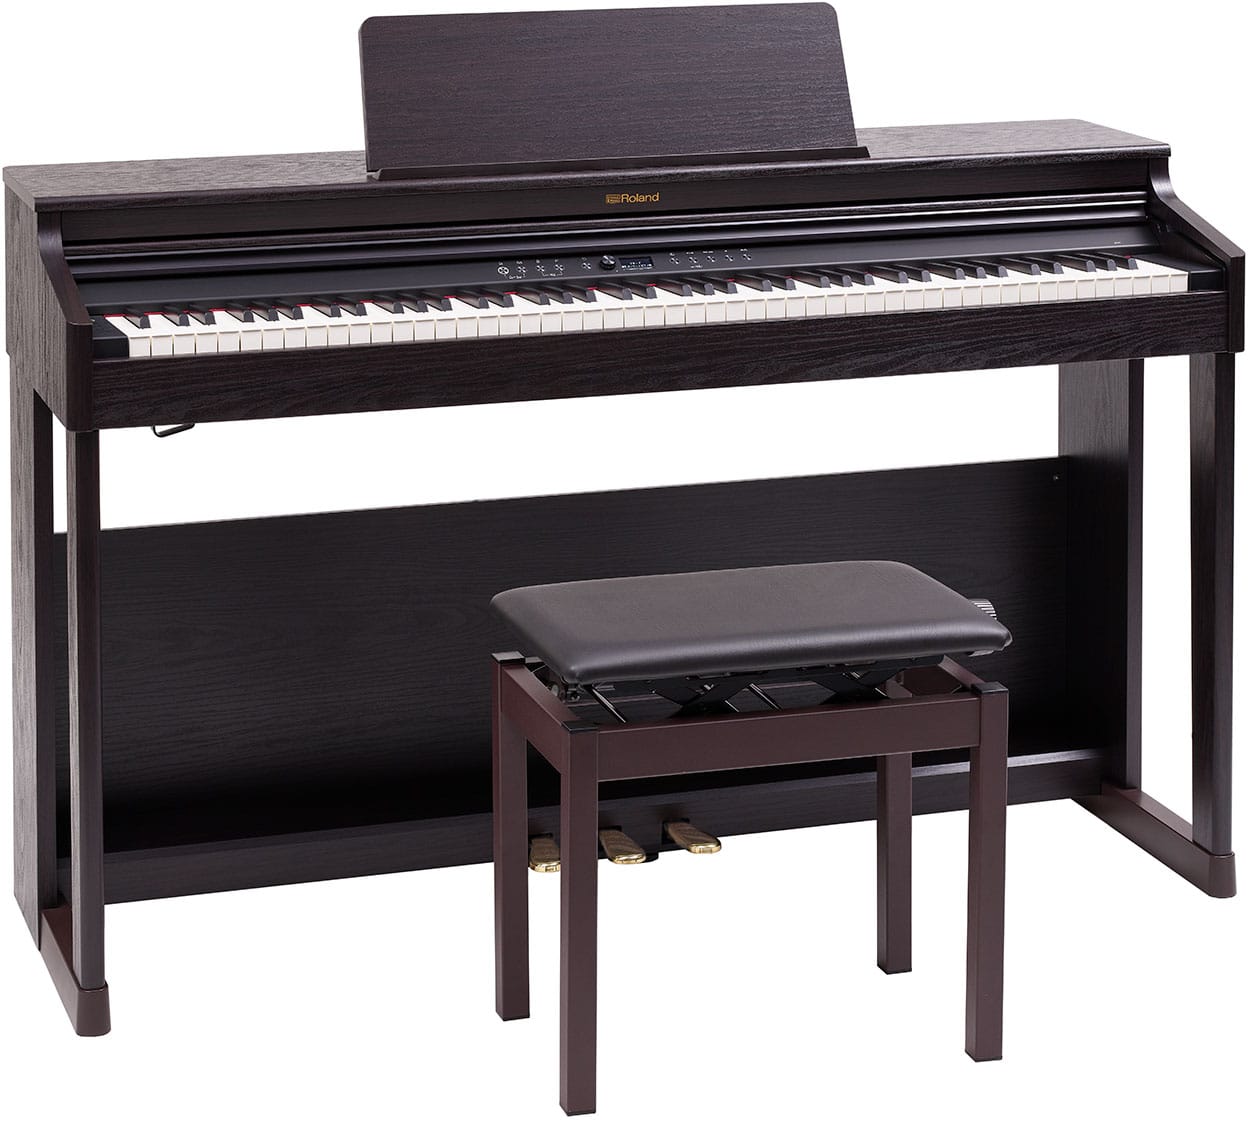 [https://www.shimamura.co.jp/shop/fukuoka/piano-keyboard/20171101/678:title=] *[!!はじめてのピアノに最適。家族で楽しめるピアノ!!] **商品紹介 RP701は、お子さまやピアノ初心者の方にも使いやすく、家族でも楽しん […]